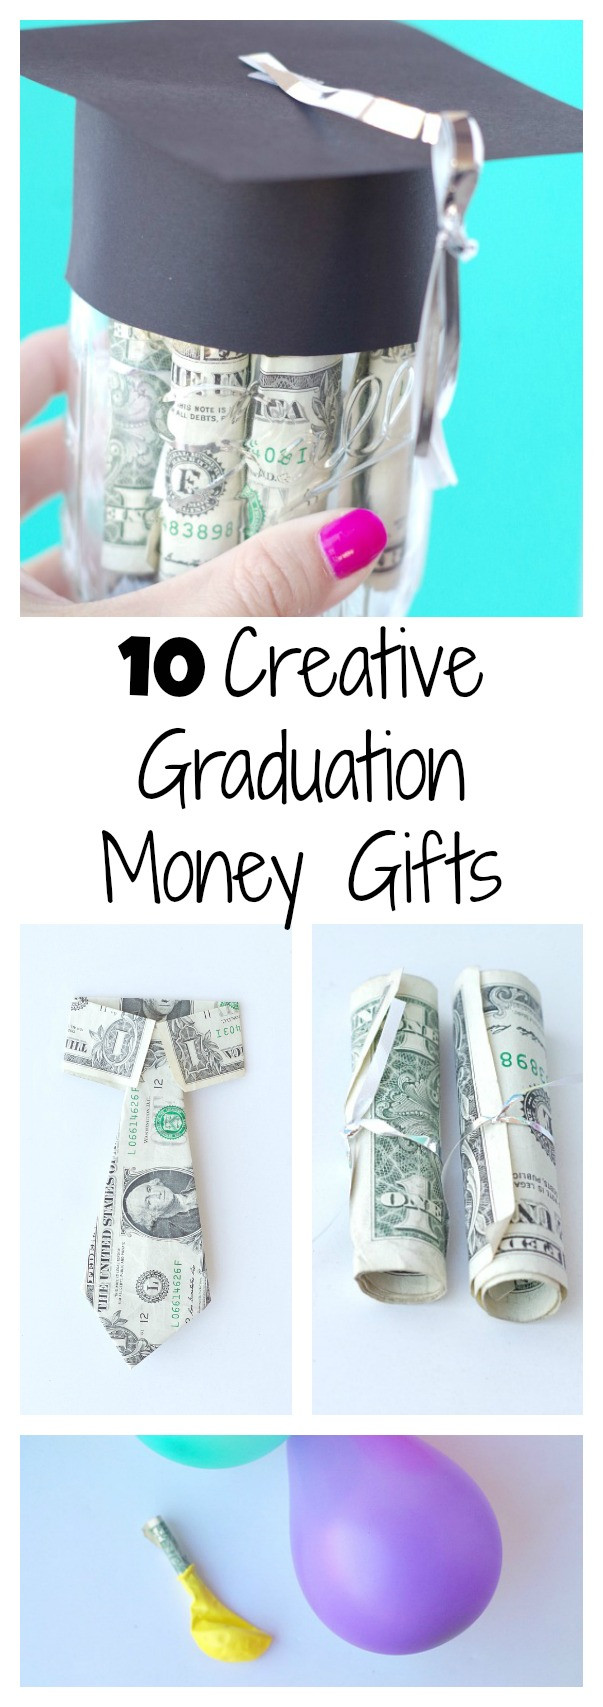 Graduation Money Gift Ideas
 10 Creative Graduation Money Gifts – Val Event Gal